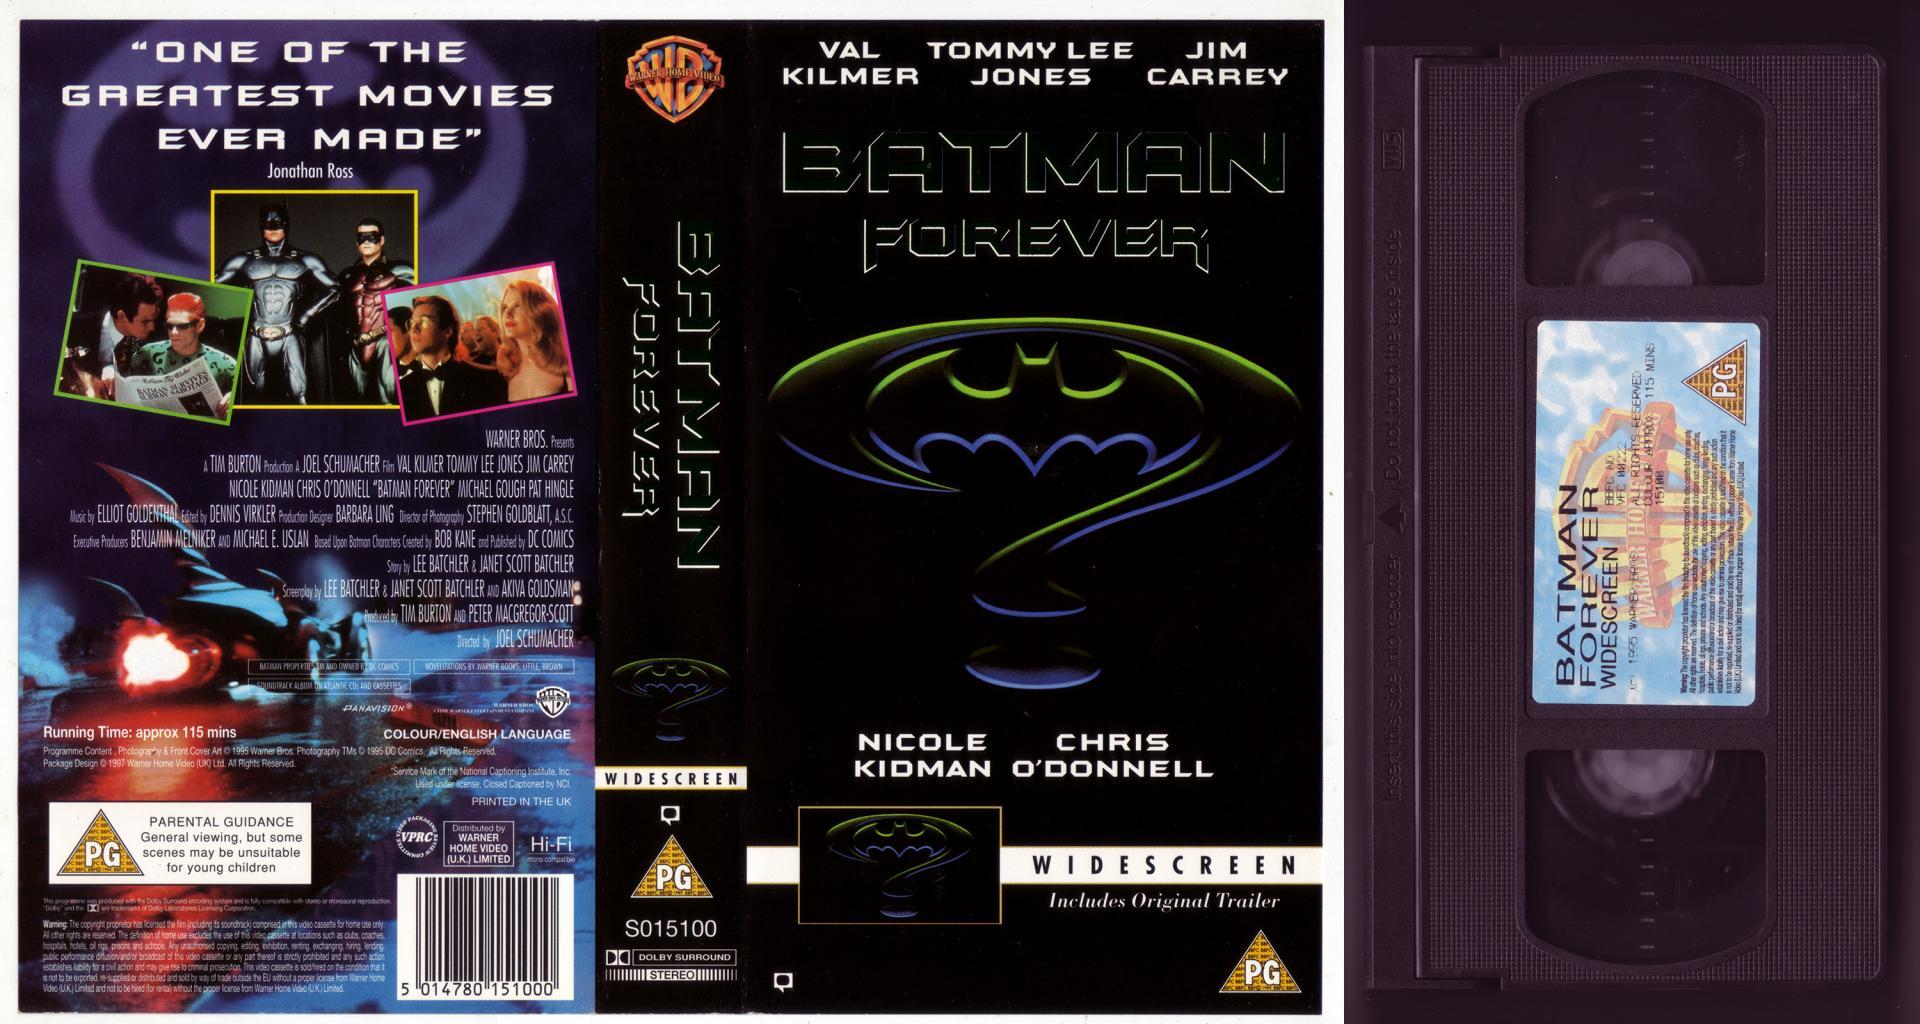 Image gallery for Batman Forever - FilmAffinity